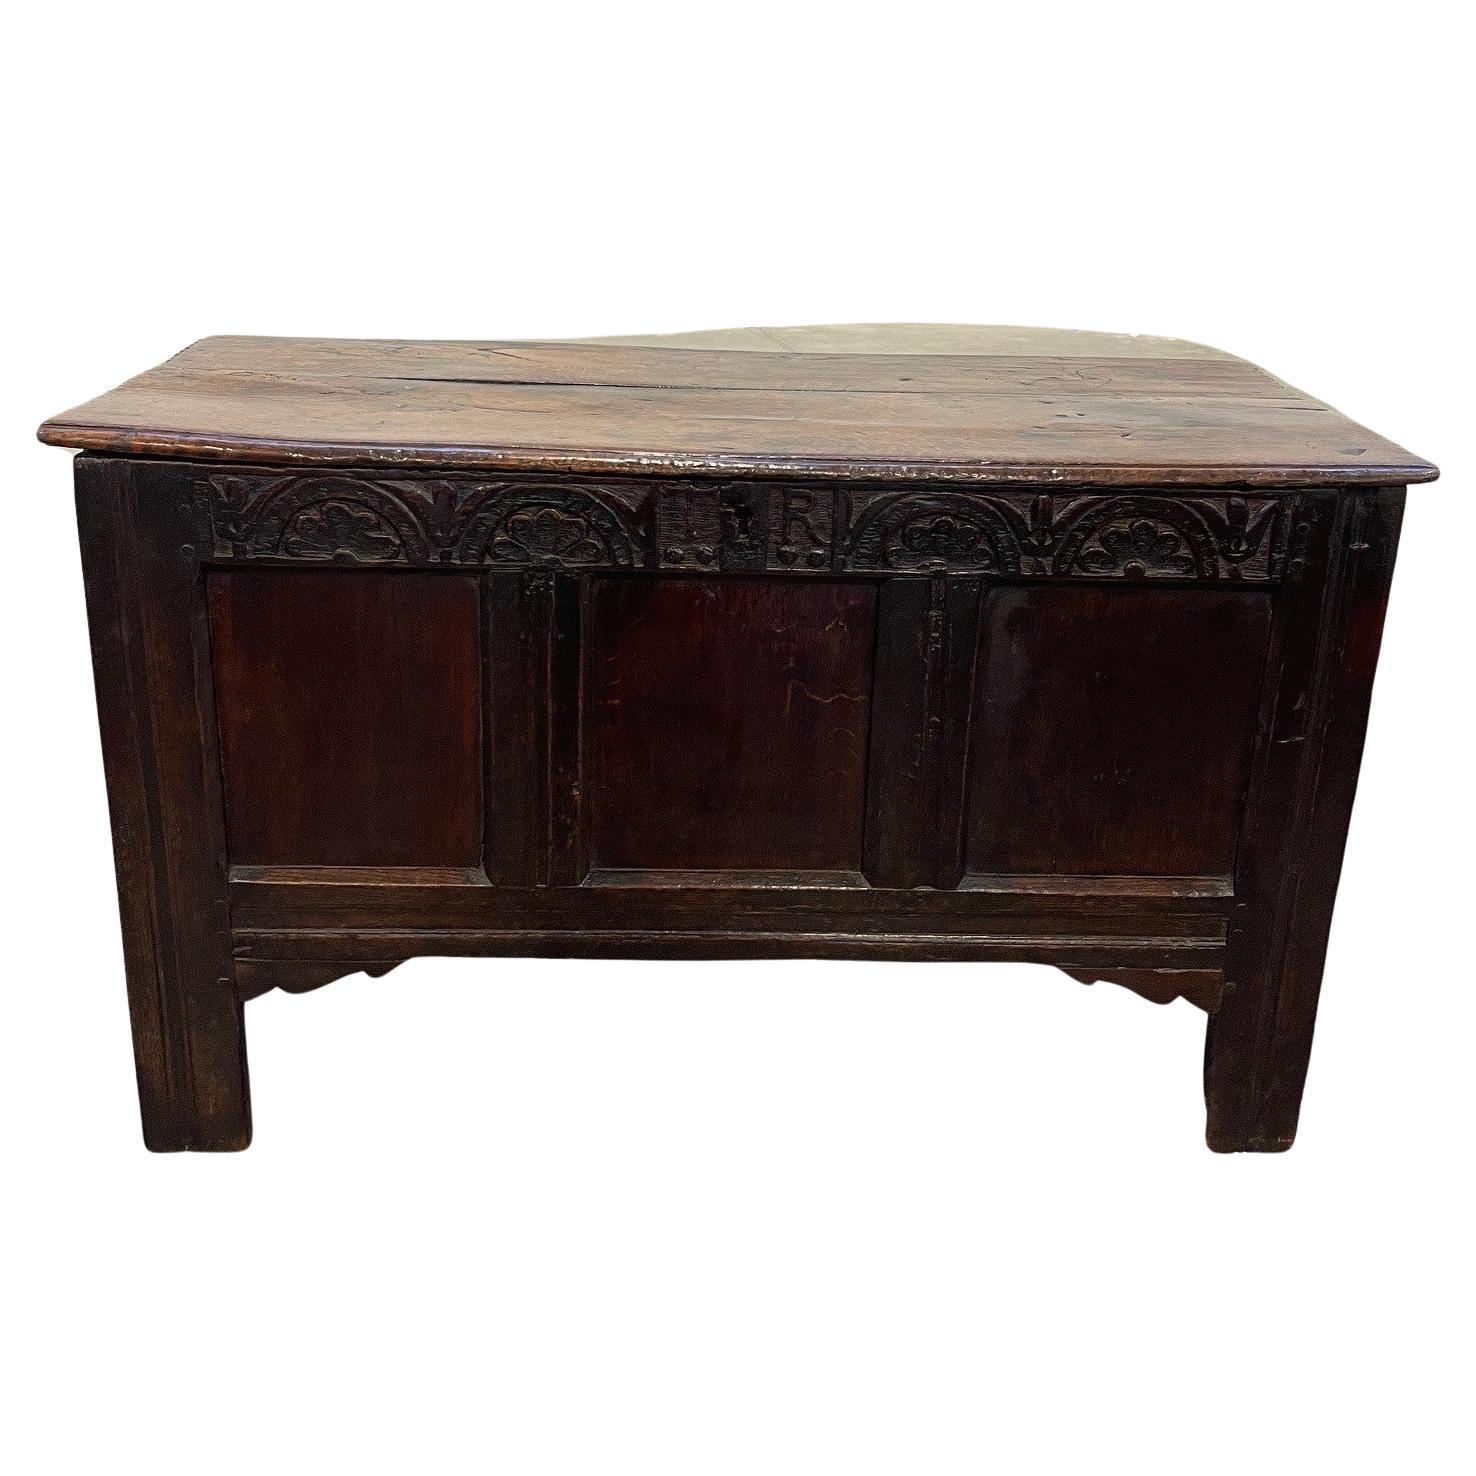 A Charles II Oak Carved Coffer For Sale